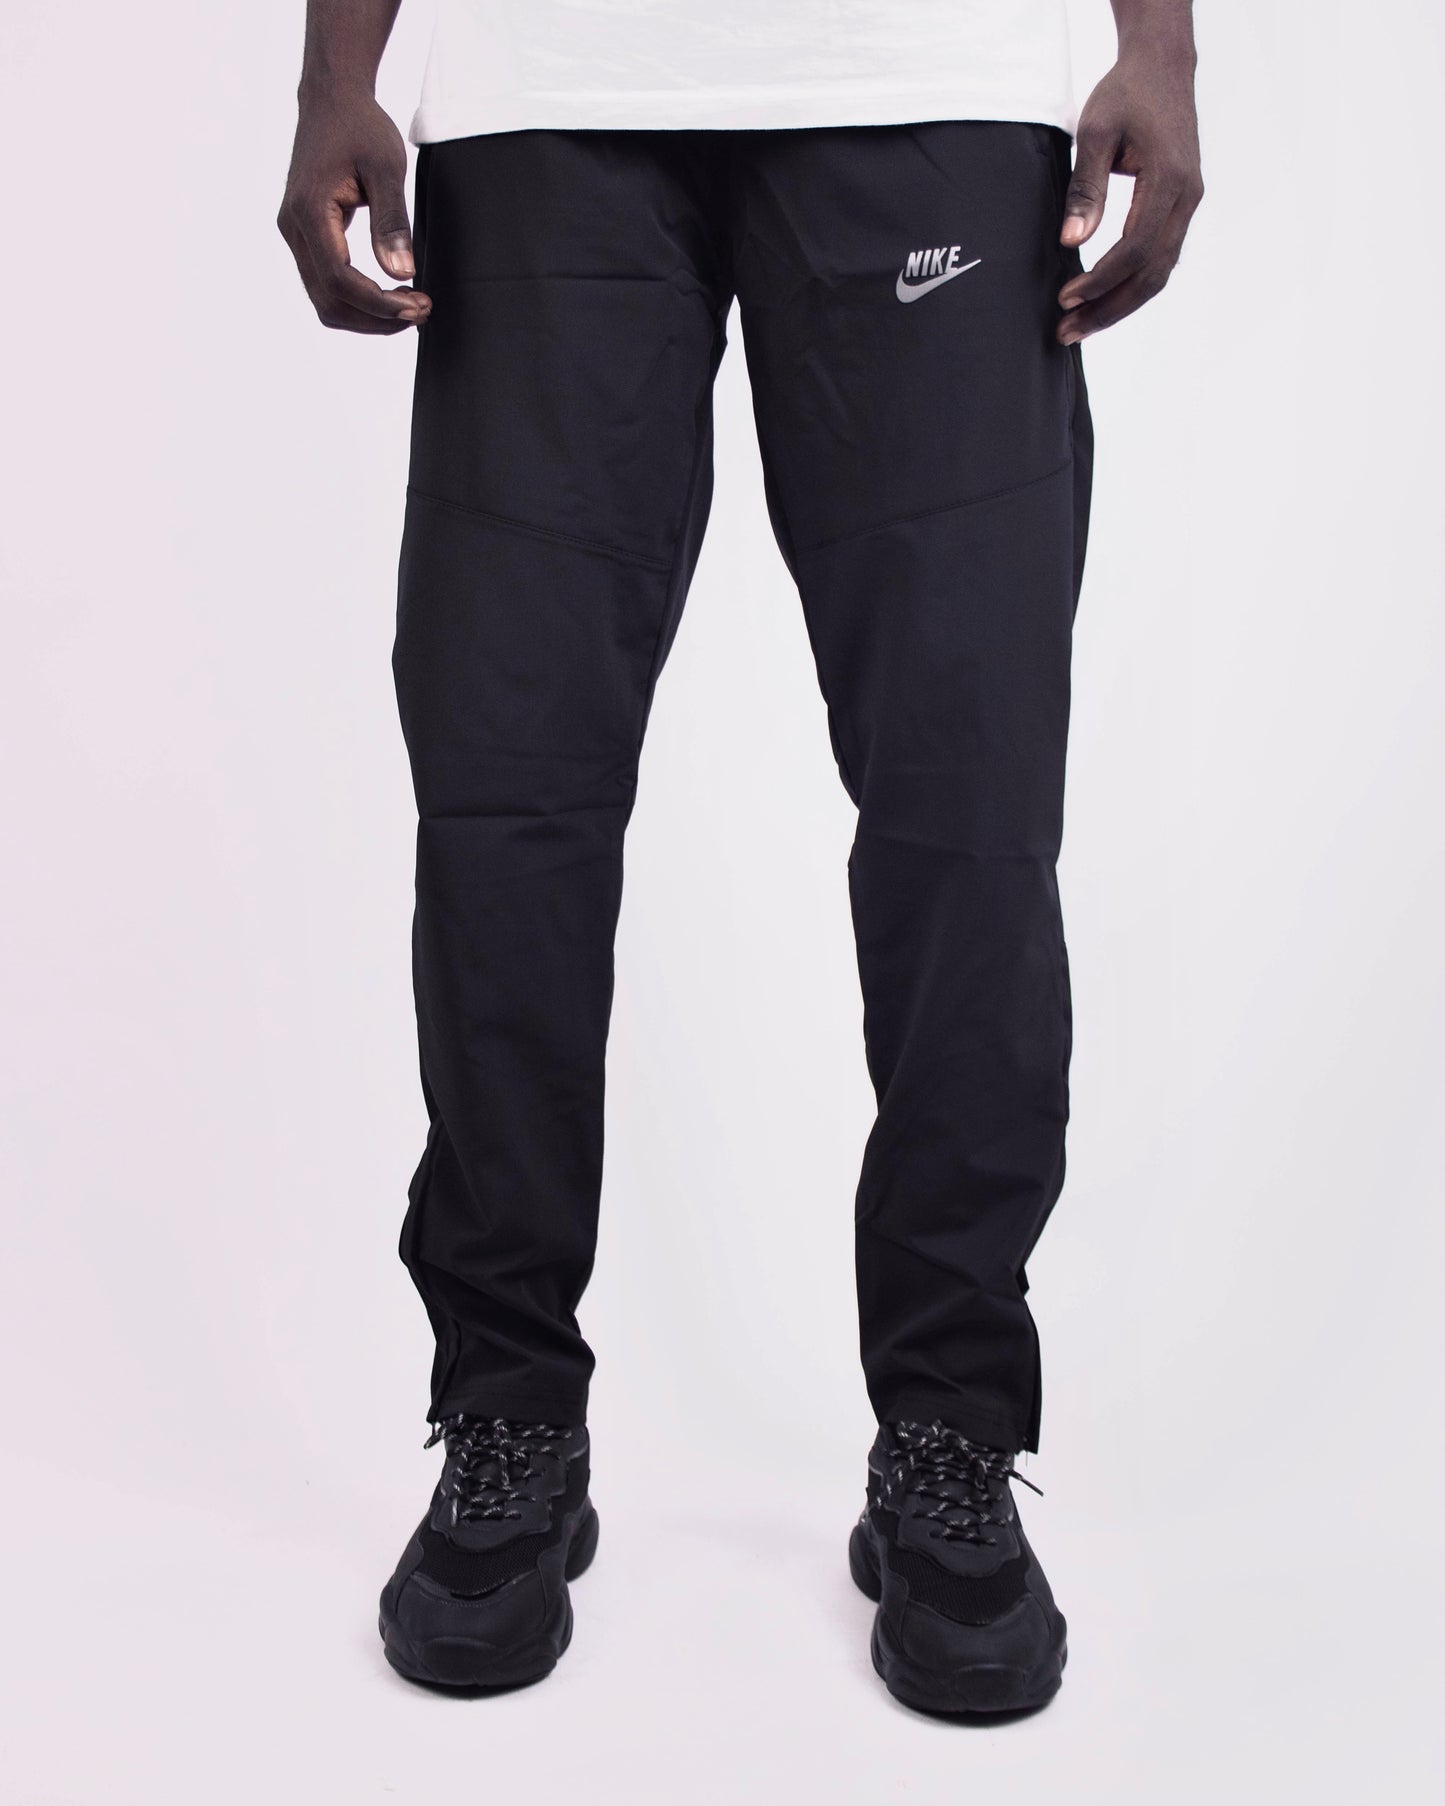 Nike Dri-fit track pants in black